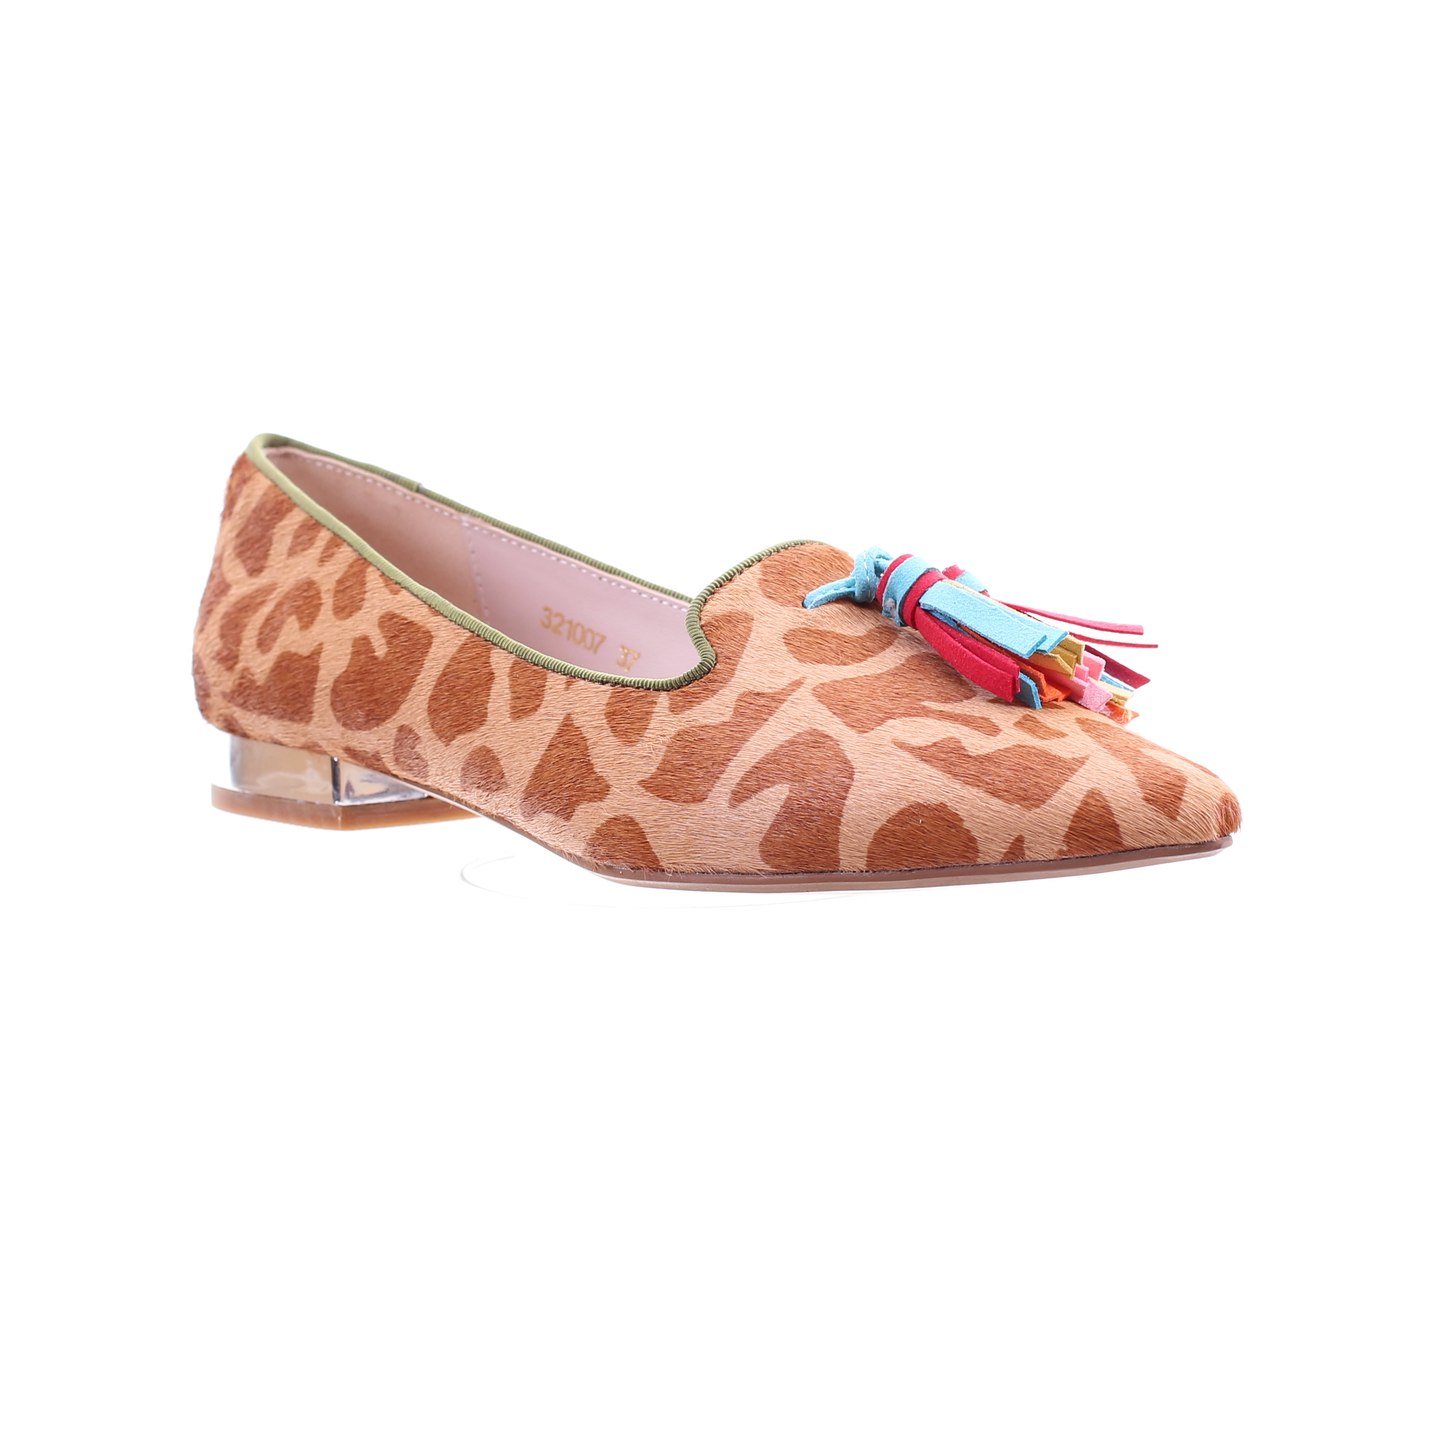 Giraffe print pointed toe ballerina